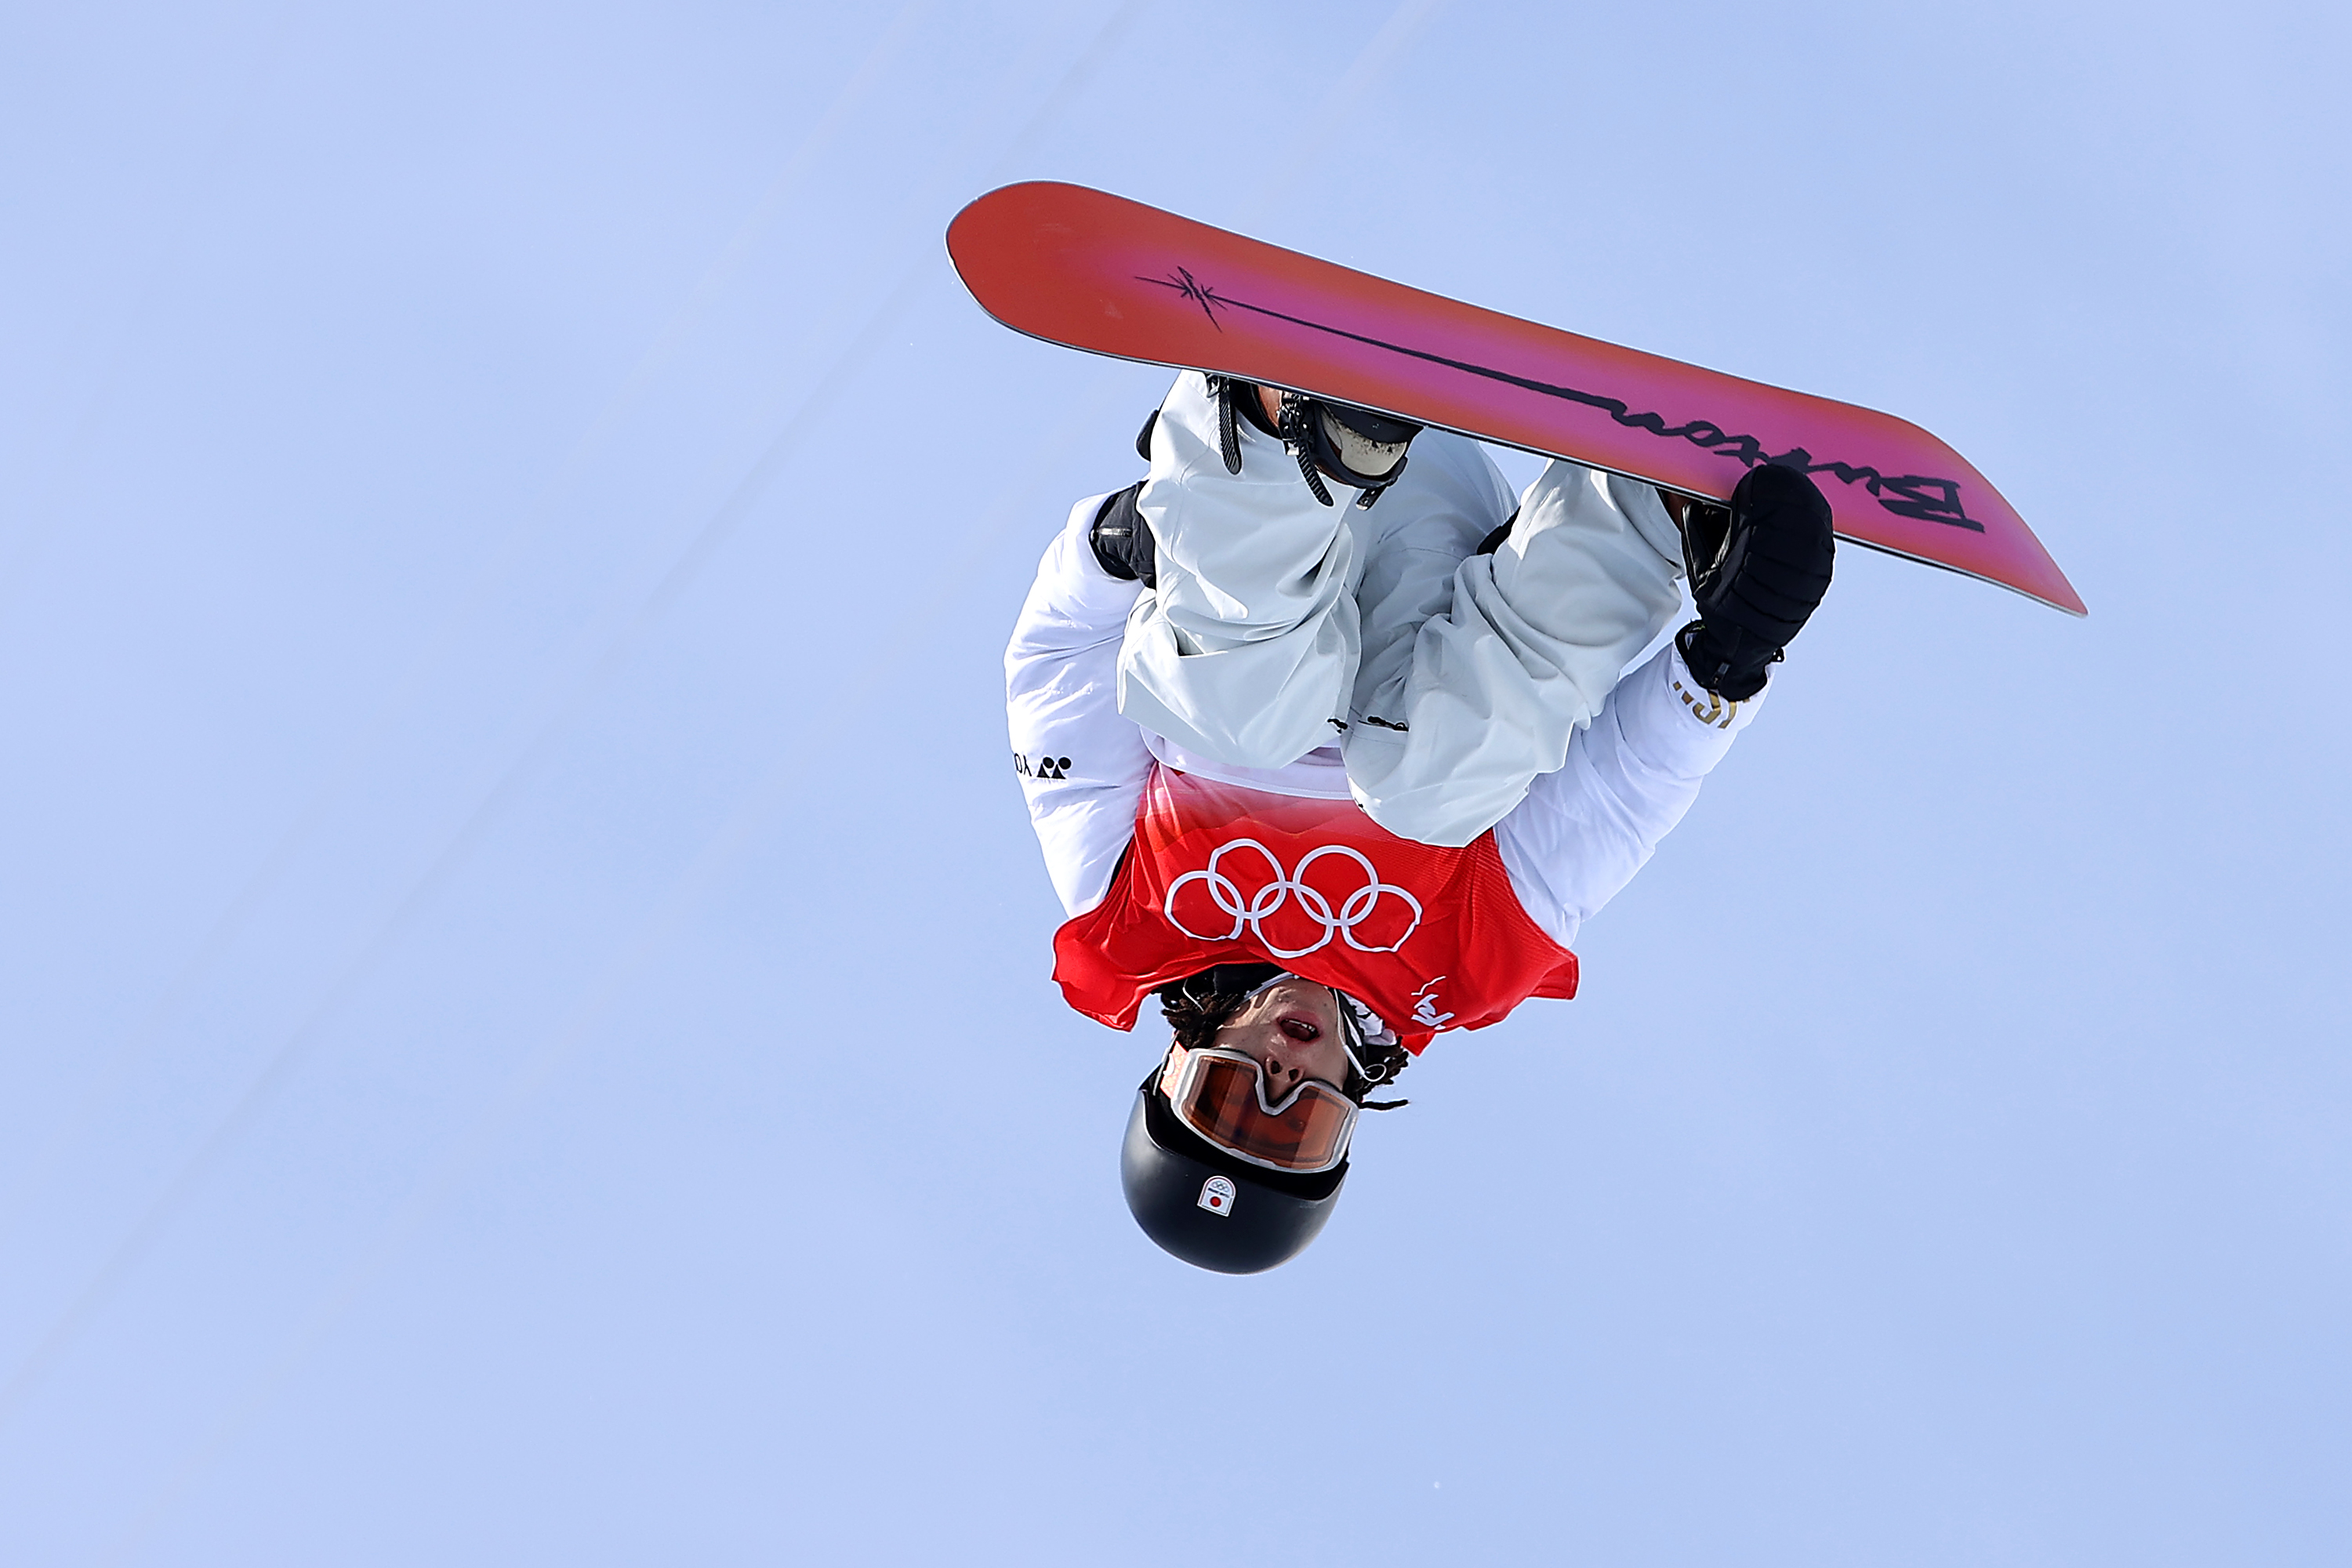 How Winter Olympics Snowboarding Halfpipe Scoring Works